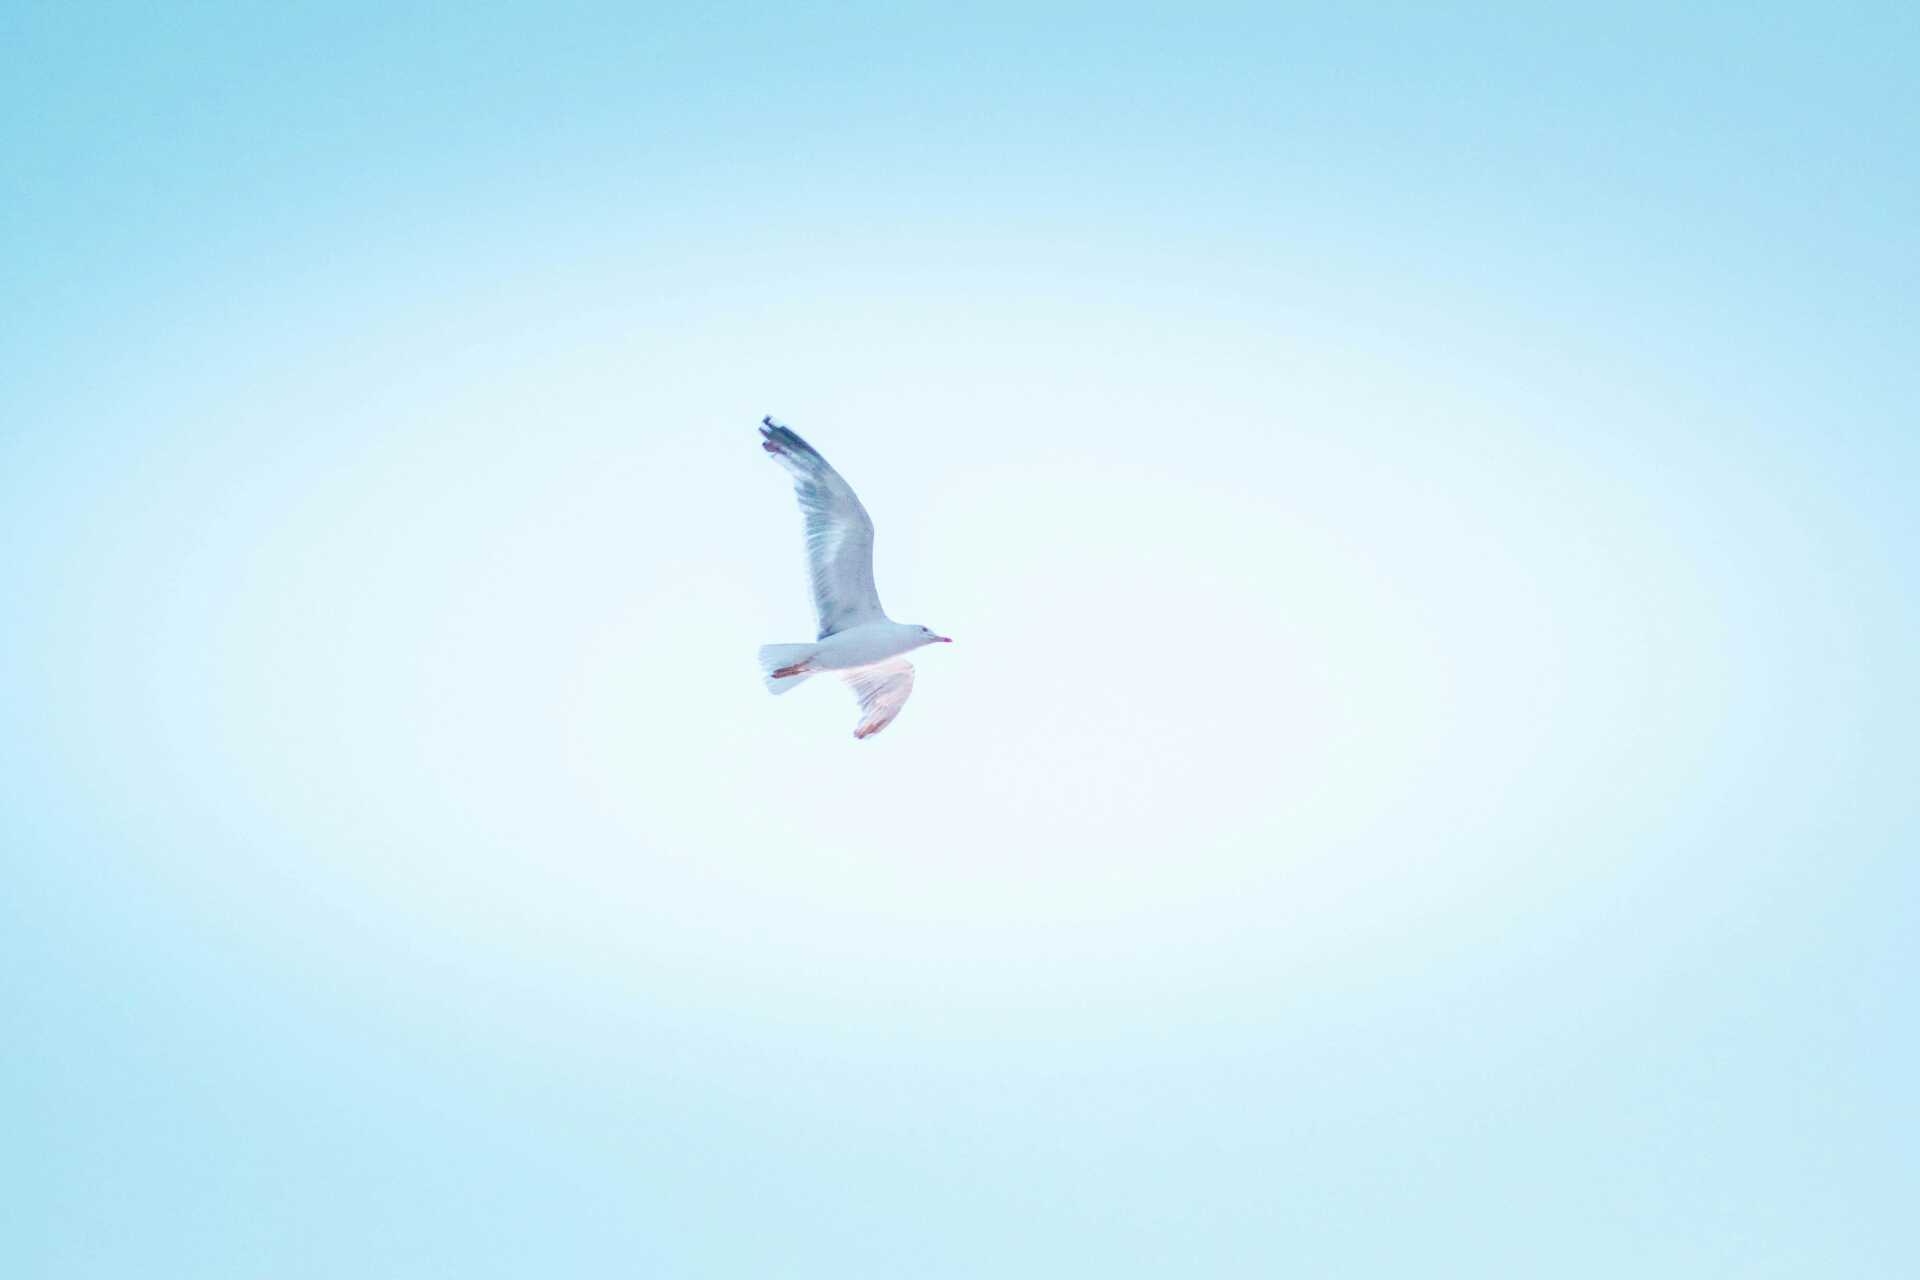 White bird flying high against a bright blue sky